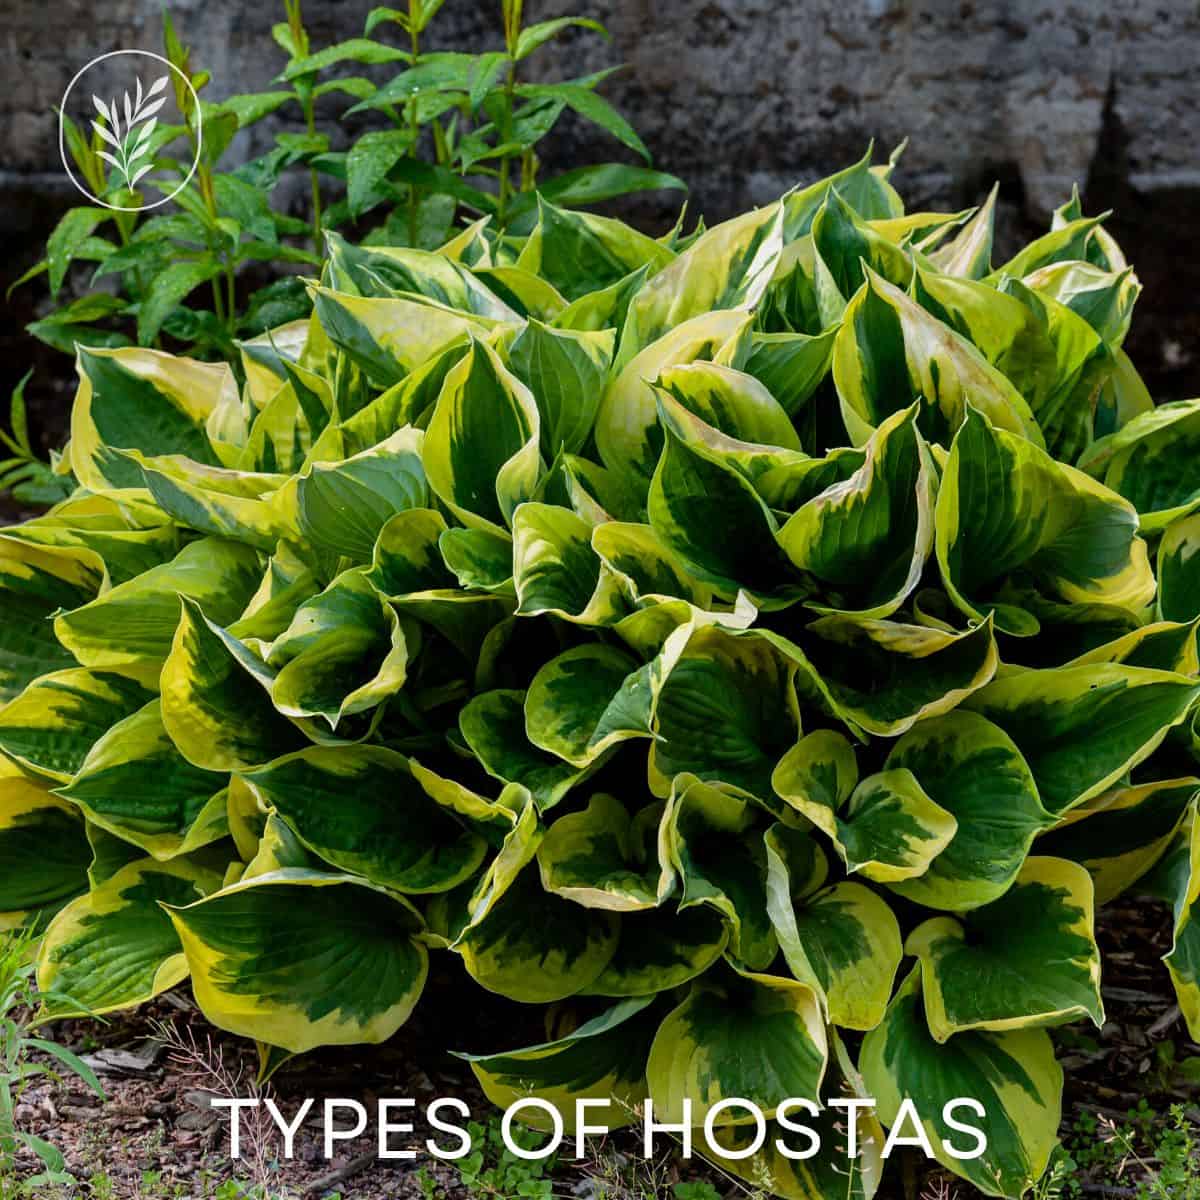 Types of hostas via @home4theharvest